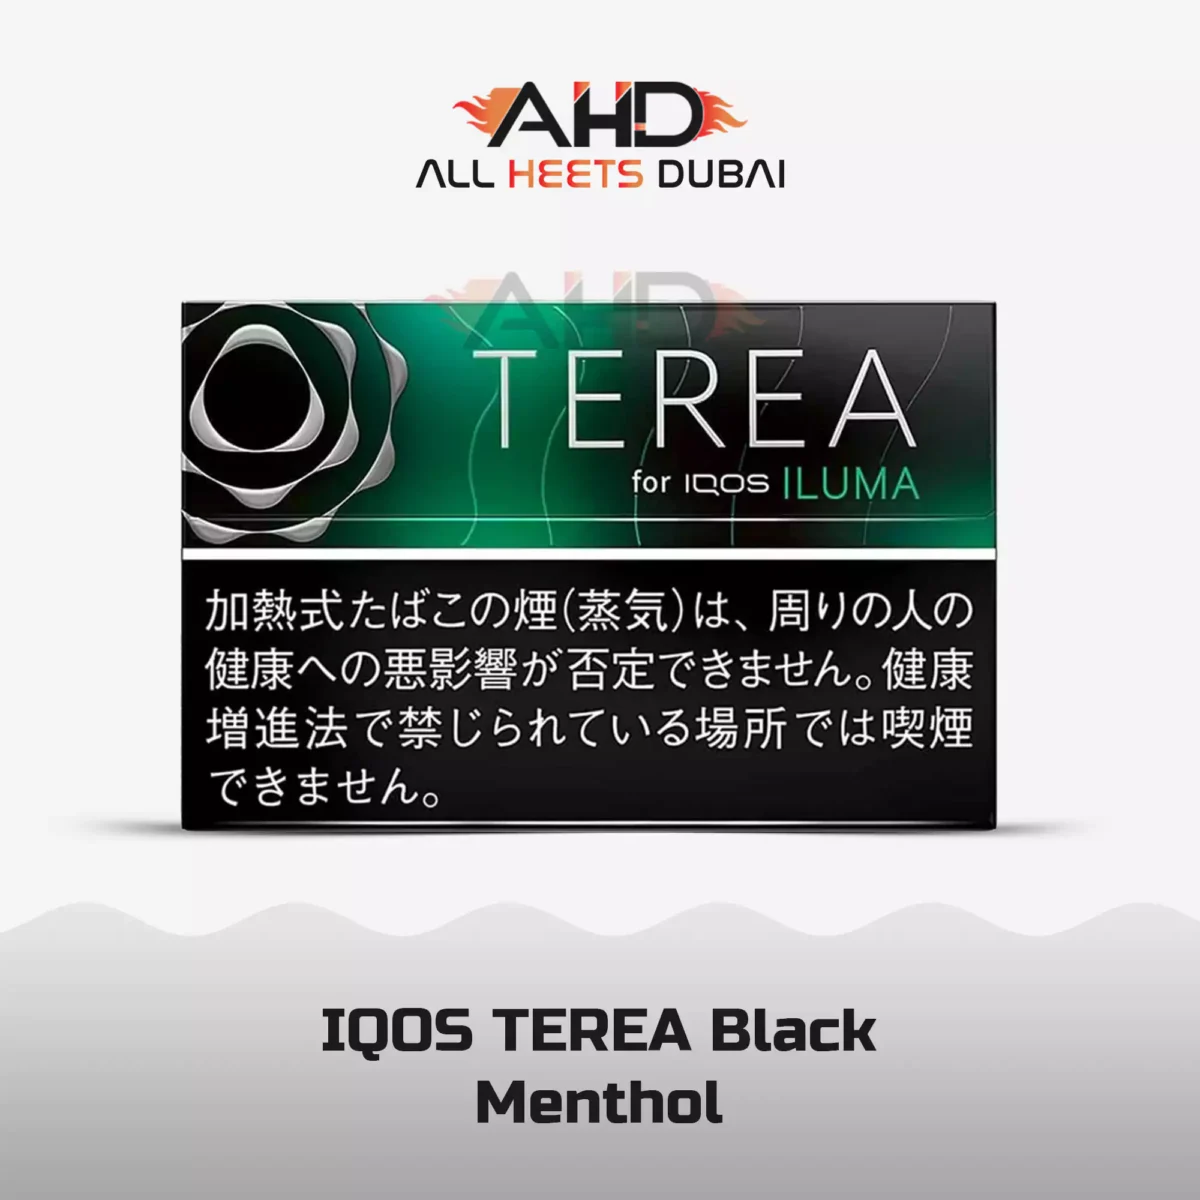 IQOS TEREA Black Menthol in Dubai UAE